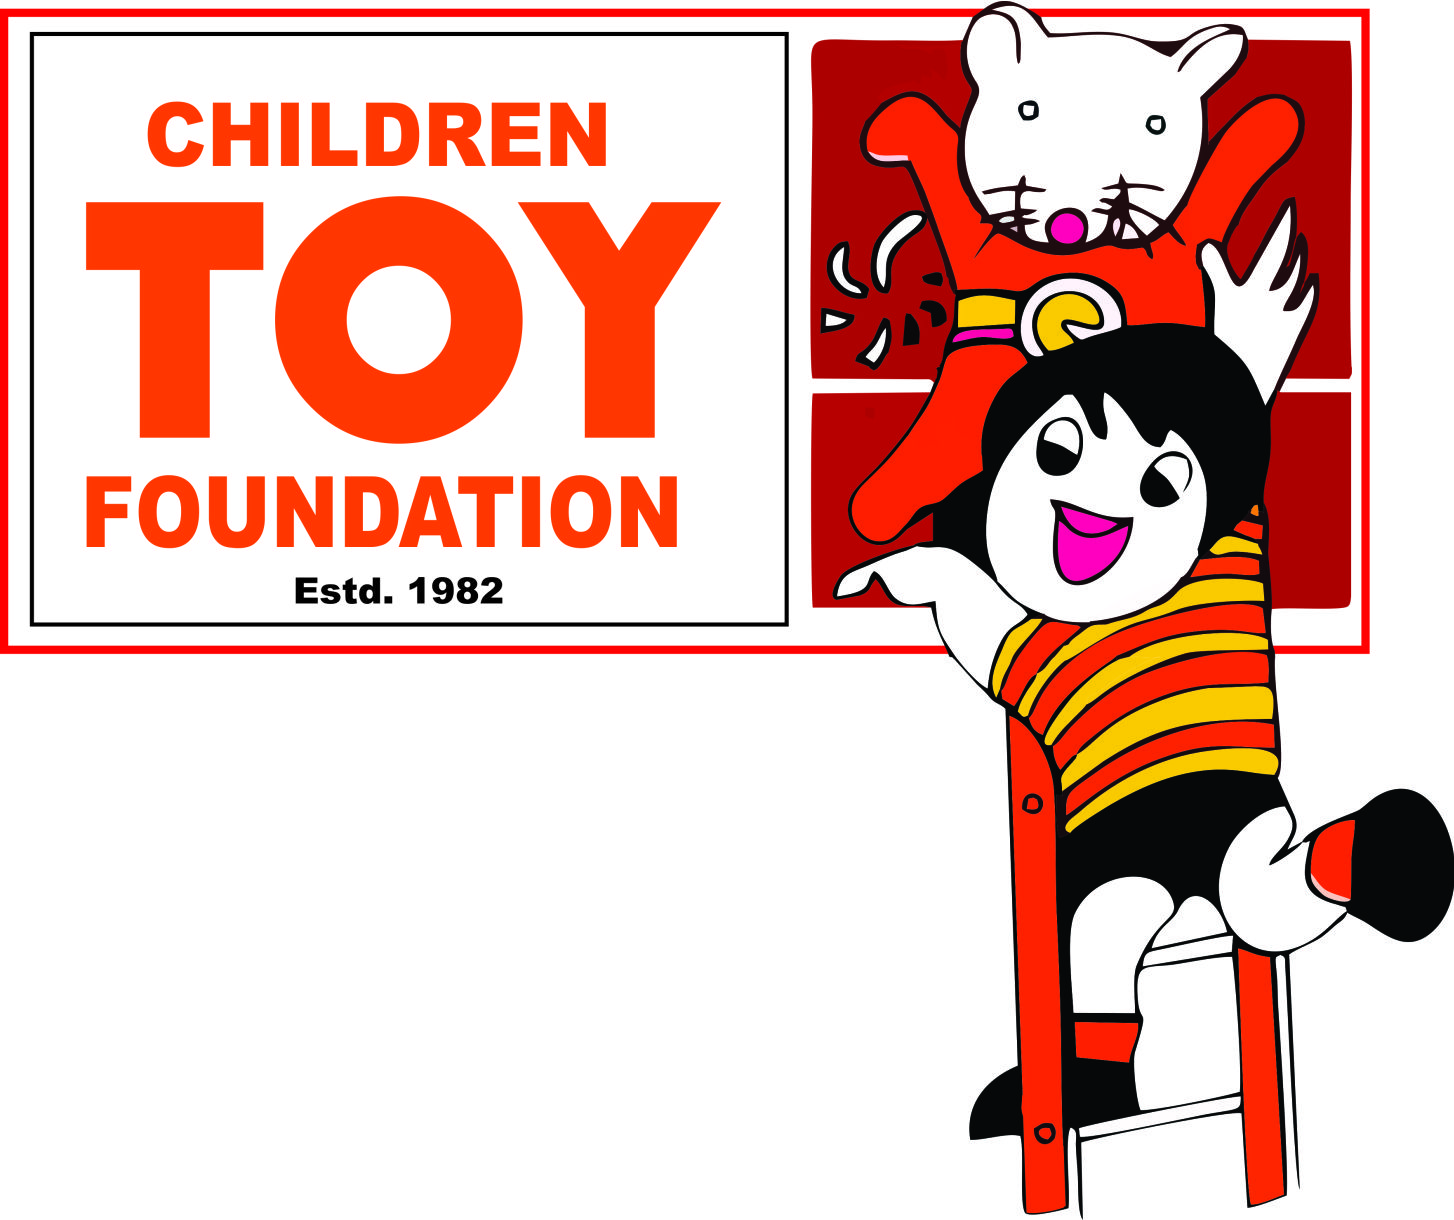 Children Toy Foundation logo